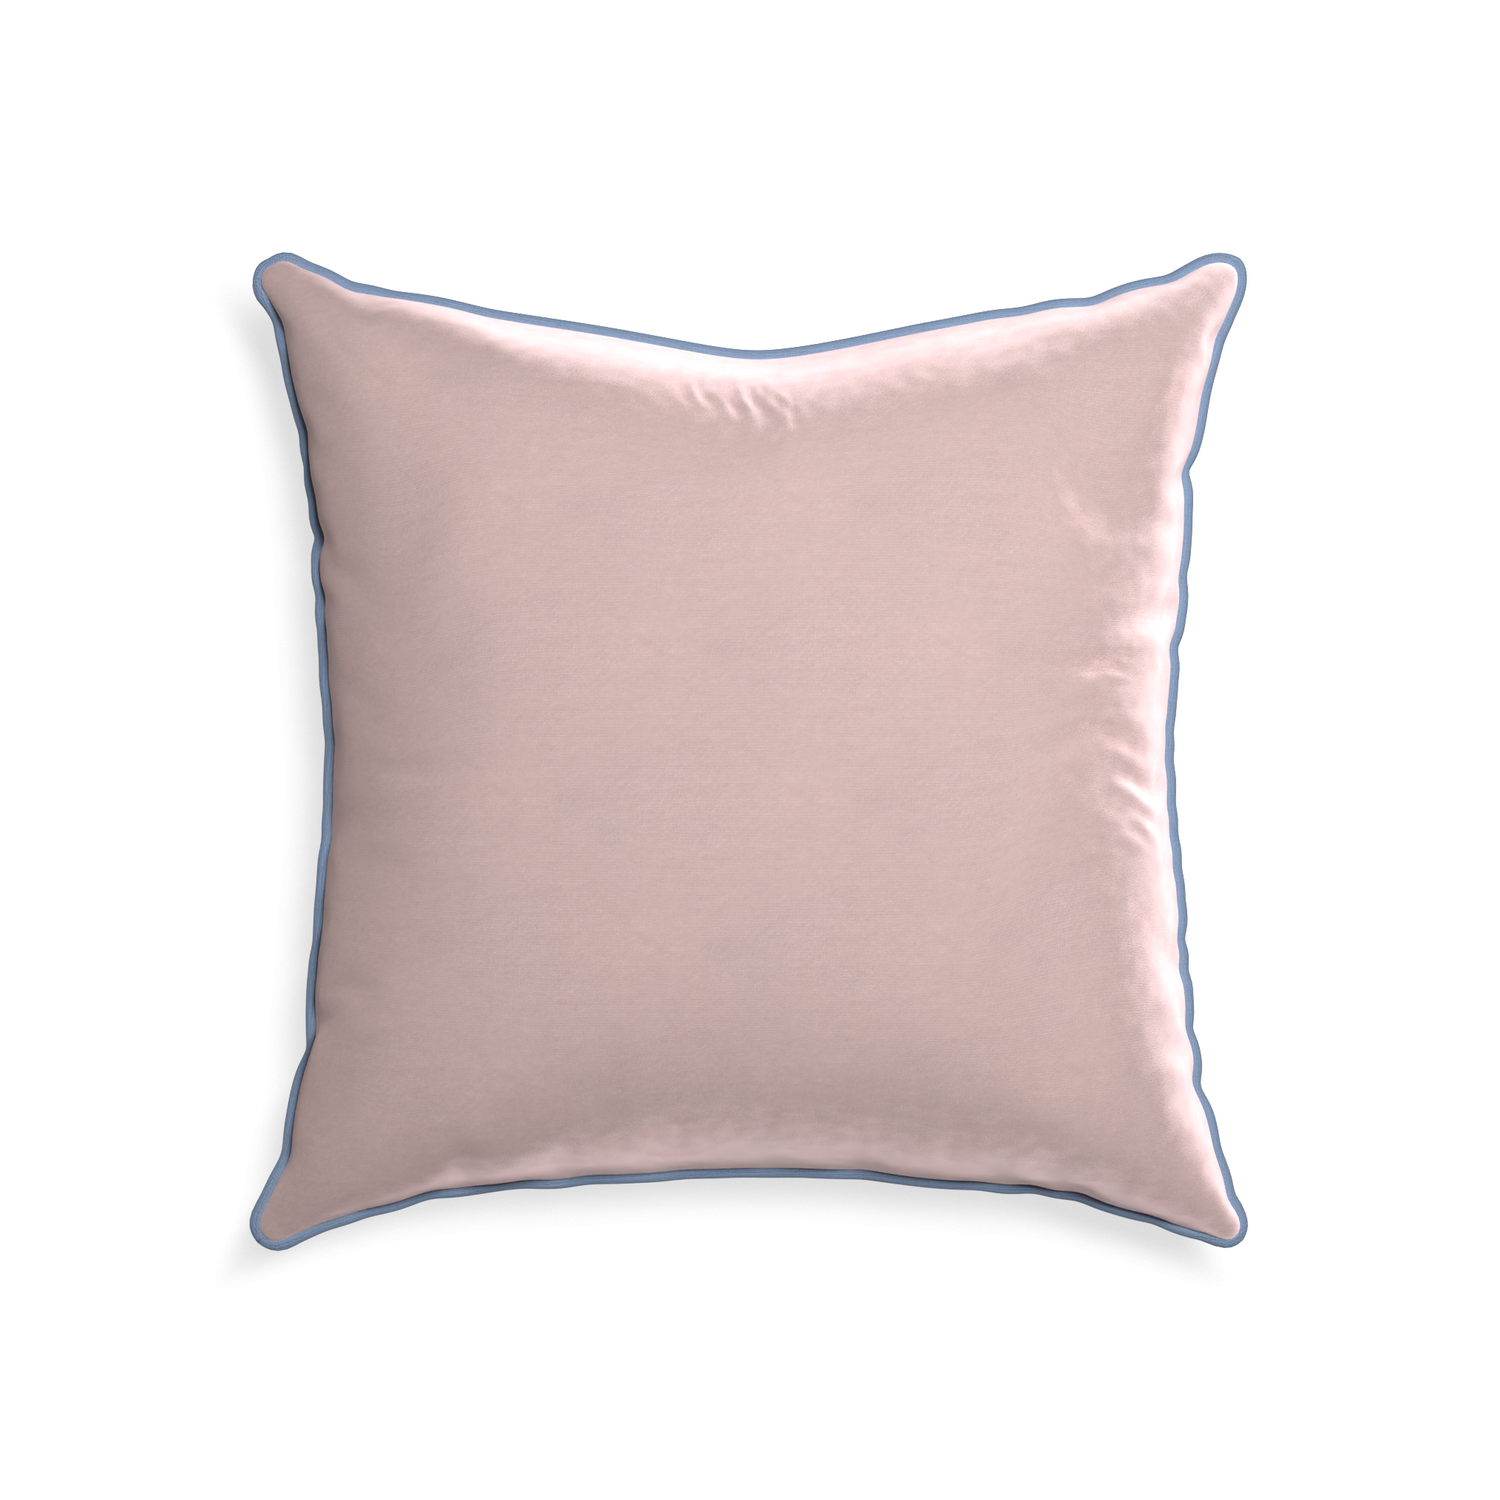 22-square rose velvet custom pillow with sky piping on white background